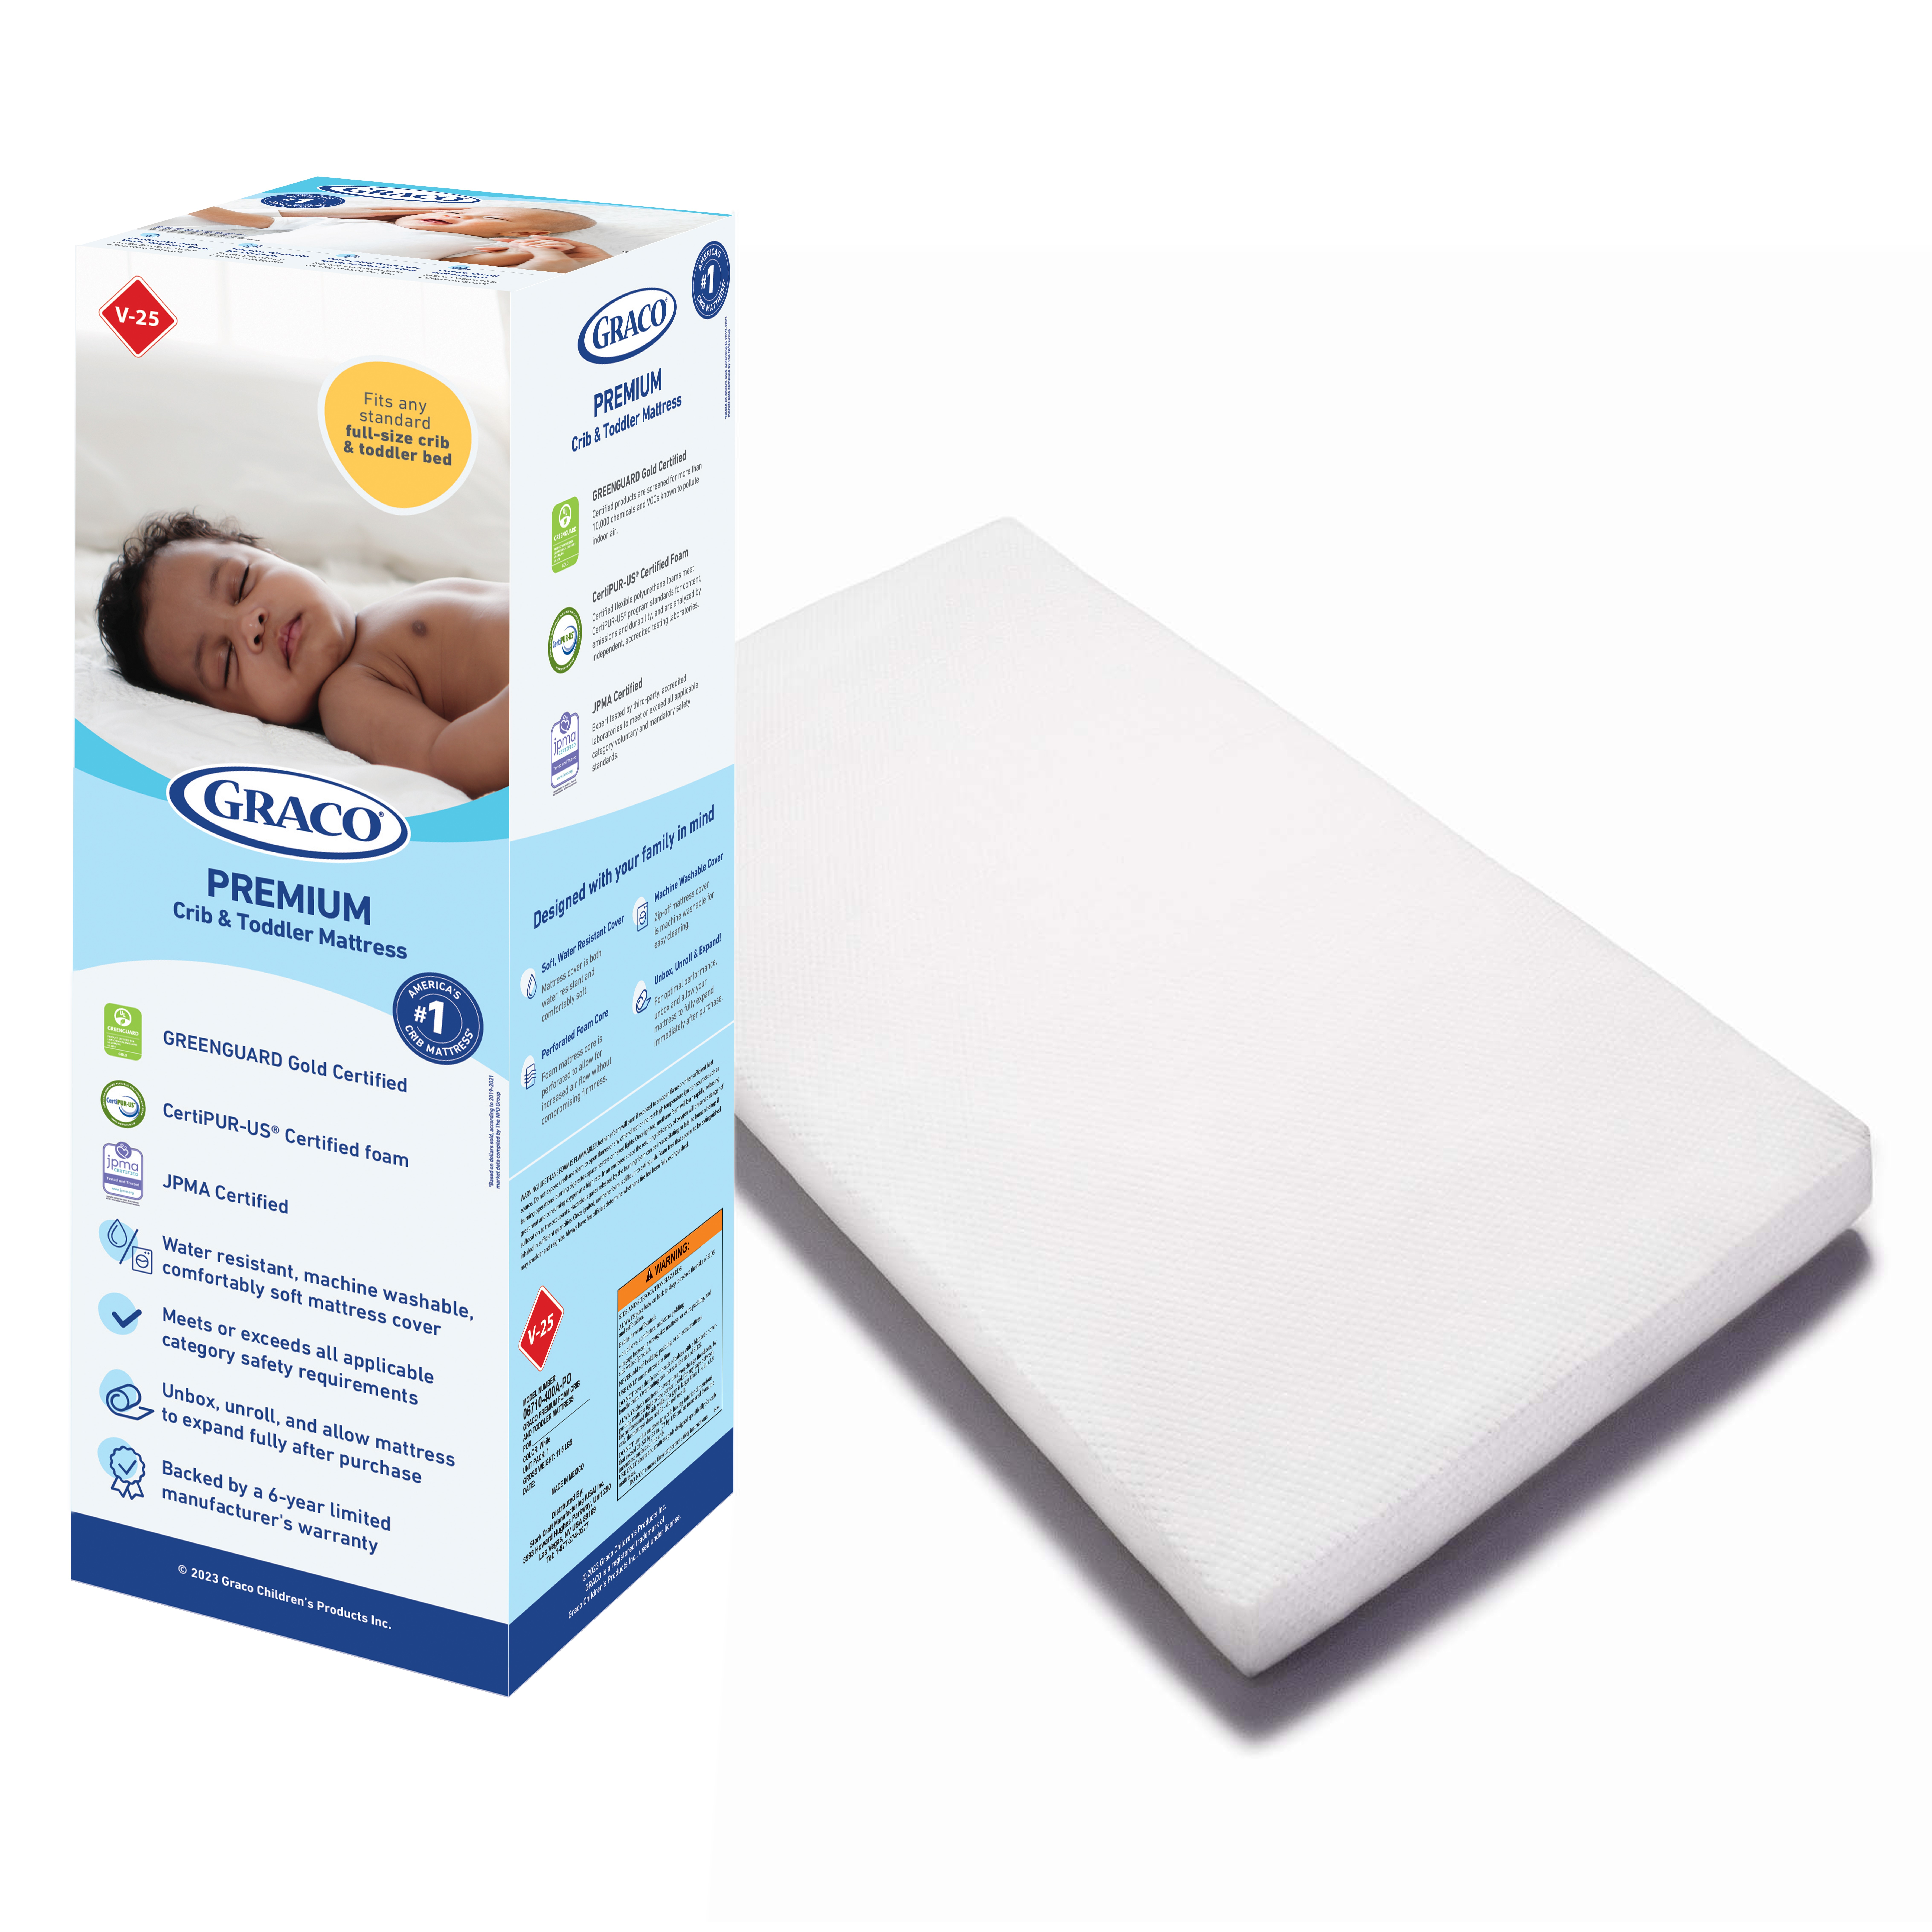 Graco Premium Foam Crib & Toddler Mattress in a Box - image 1 of 15